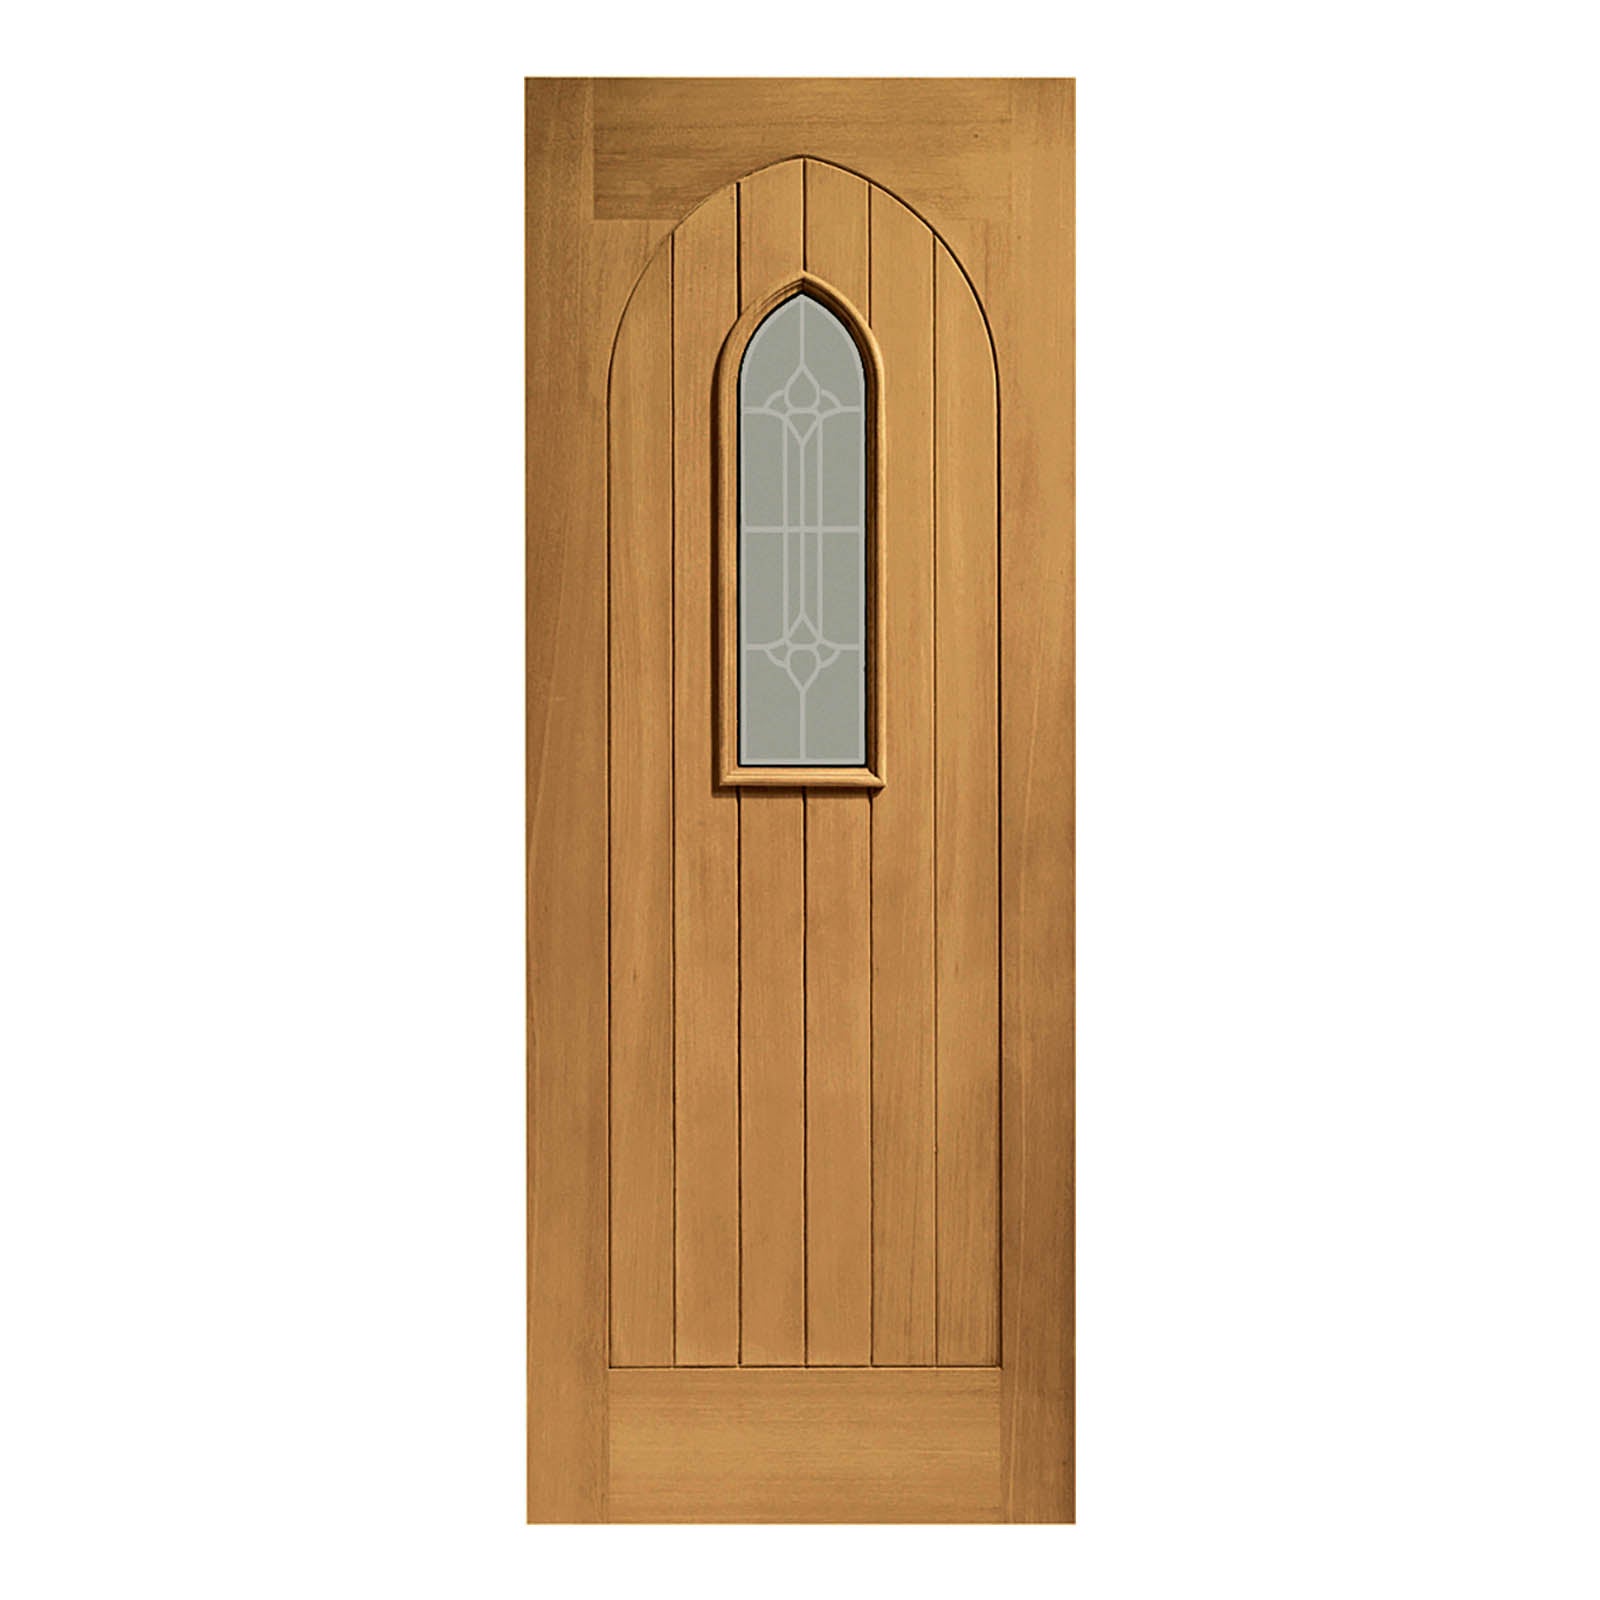 External Oak Westminster Door with Double Glazed Decorative Glass